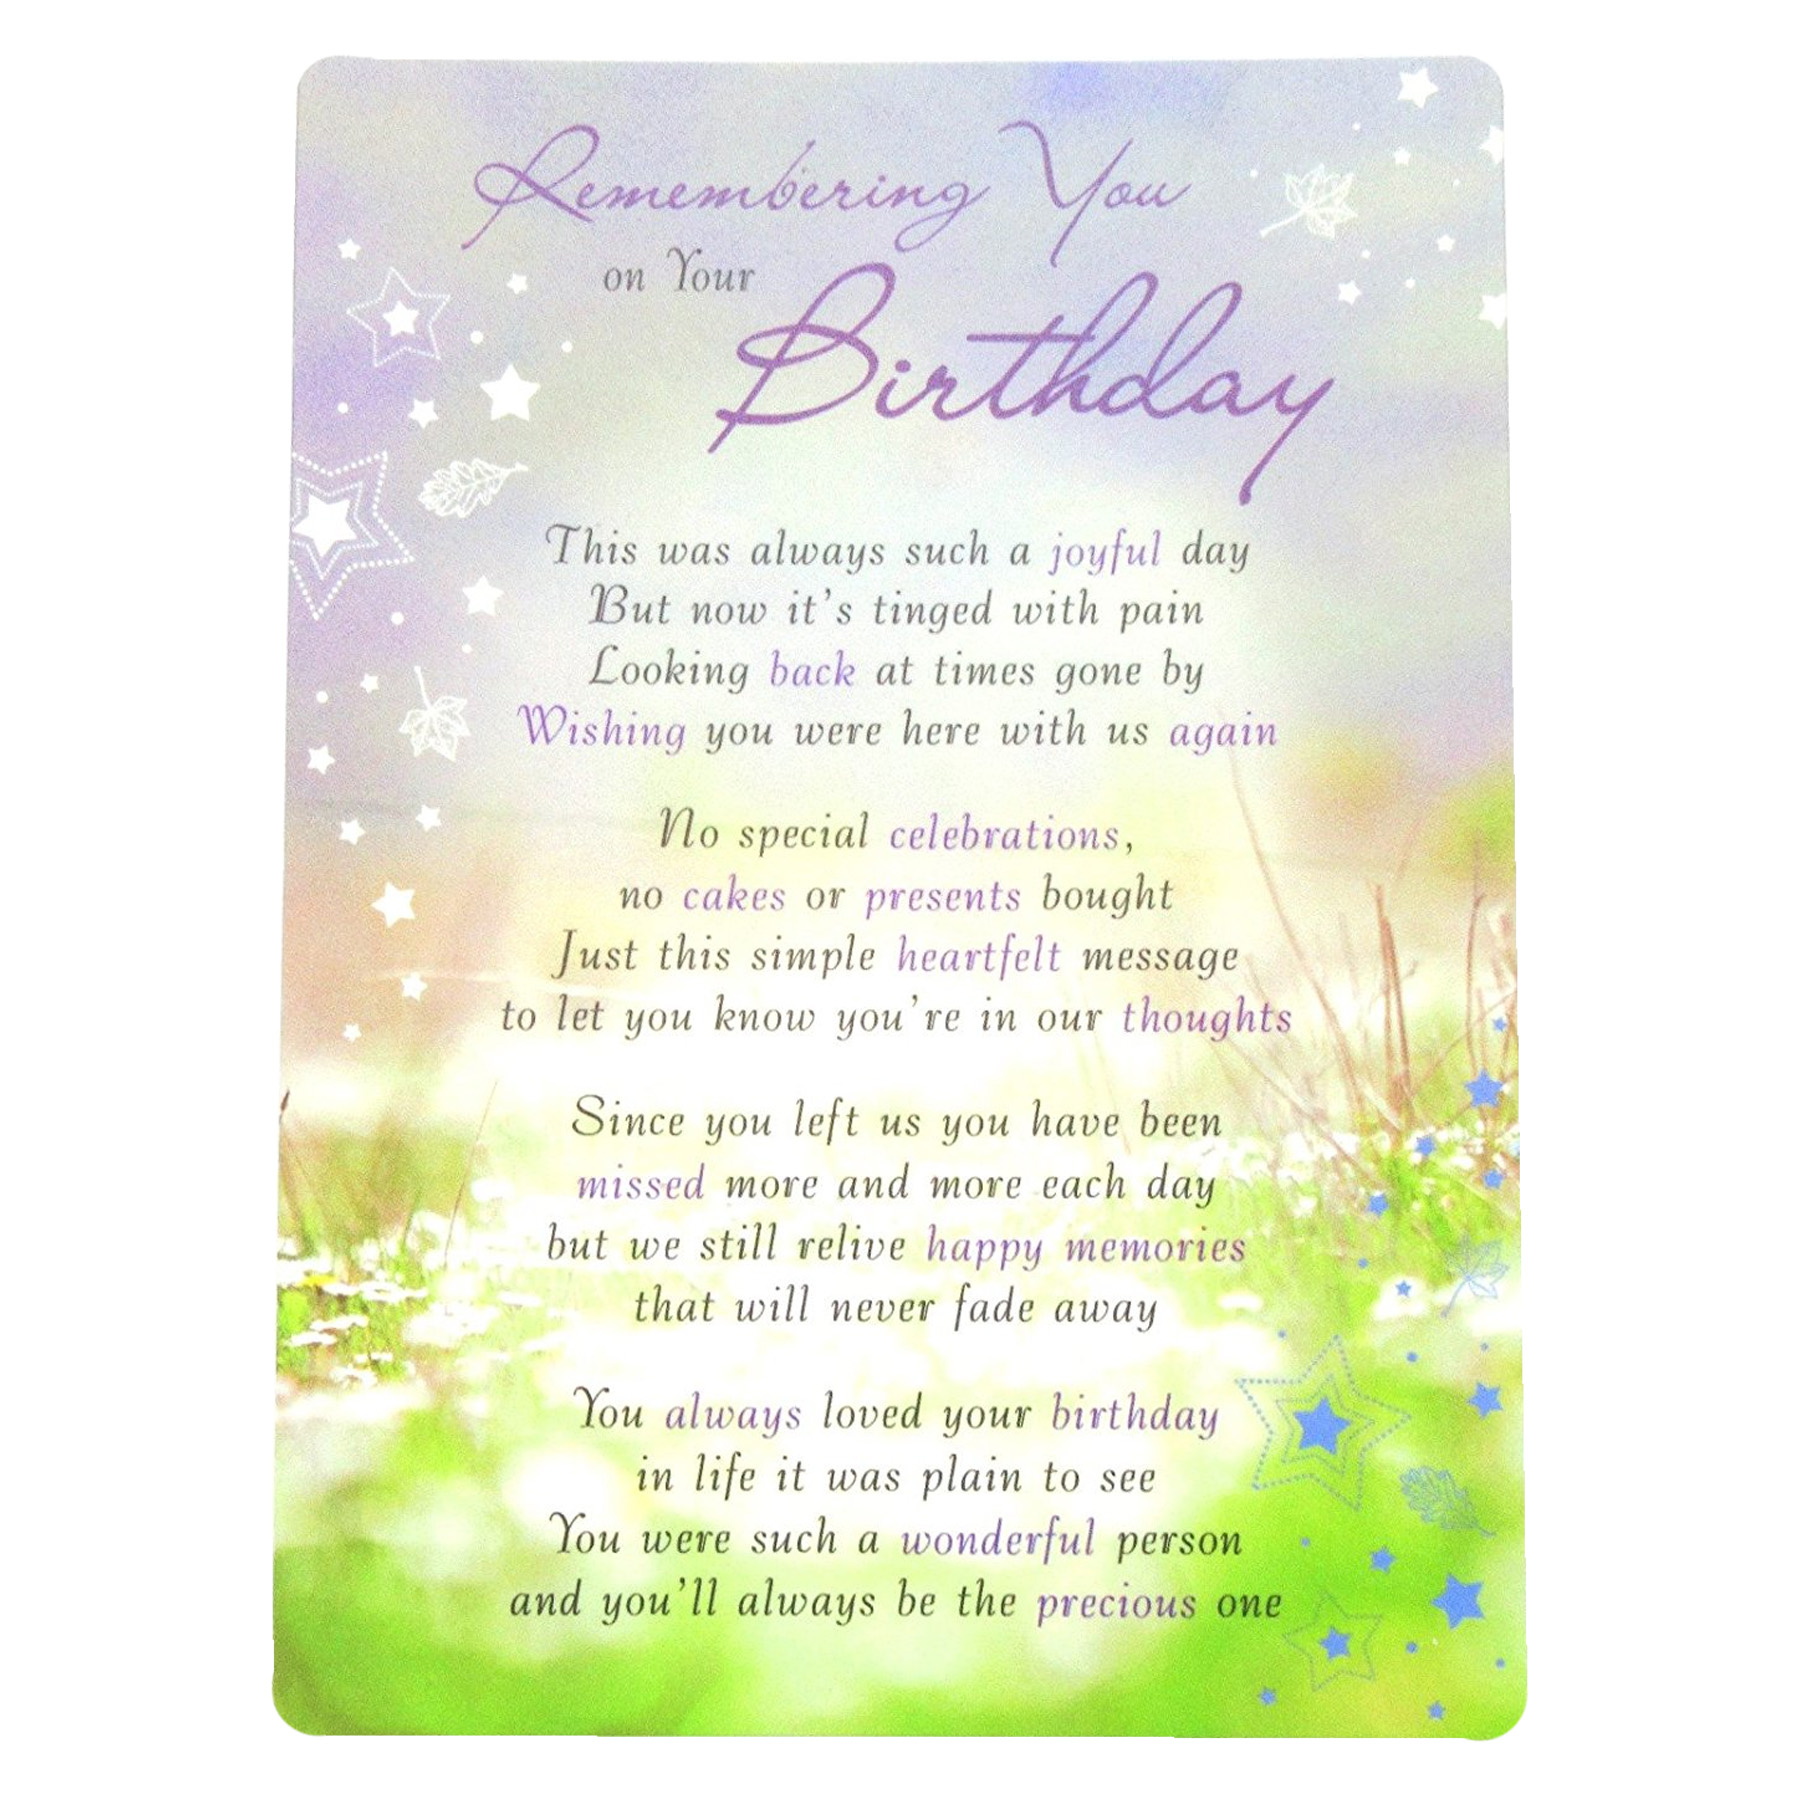 Graveside Memorial Card Weatherproof In Loving Memory Remembering You on your Birthday